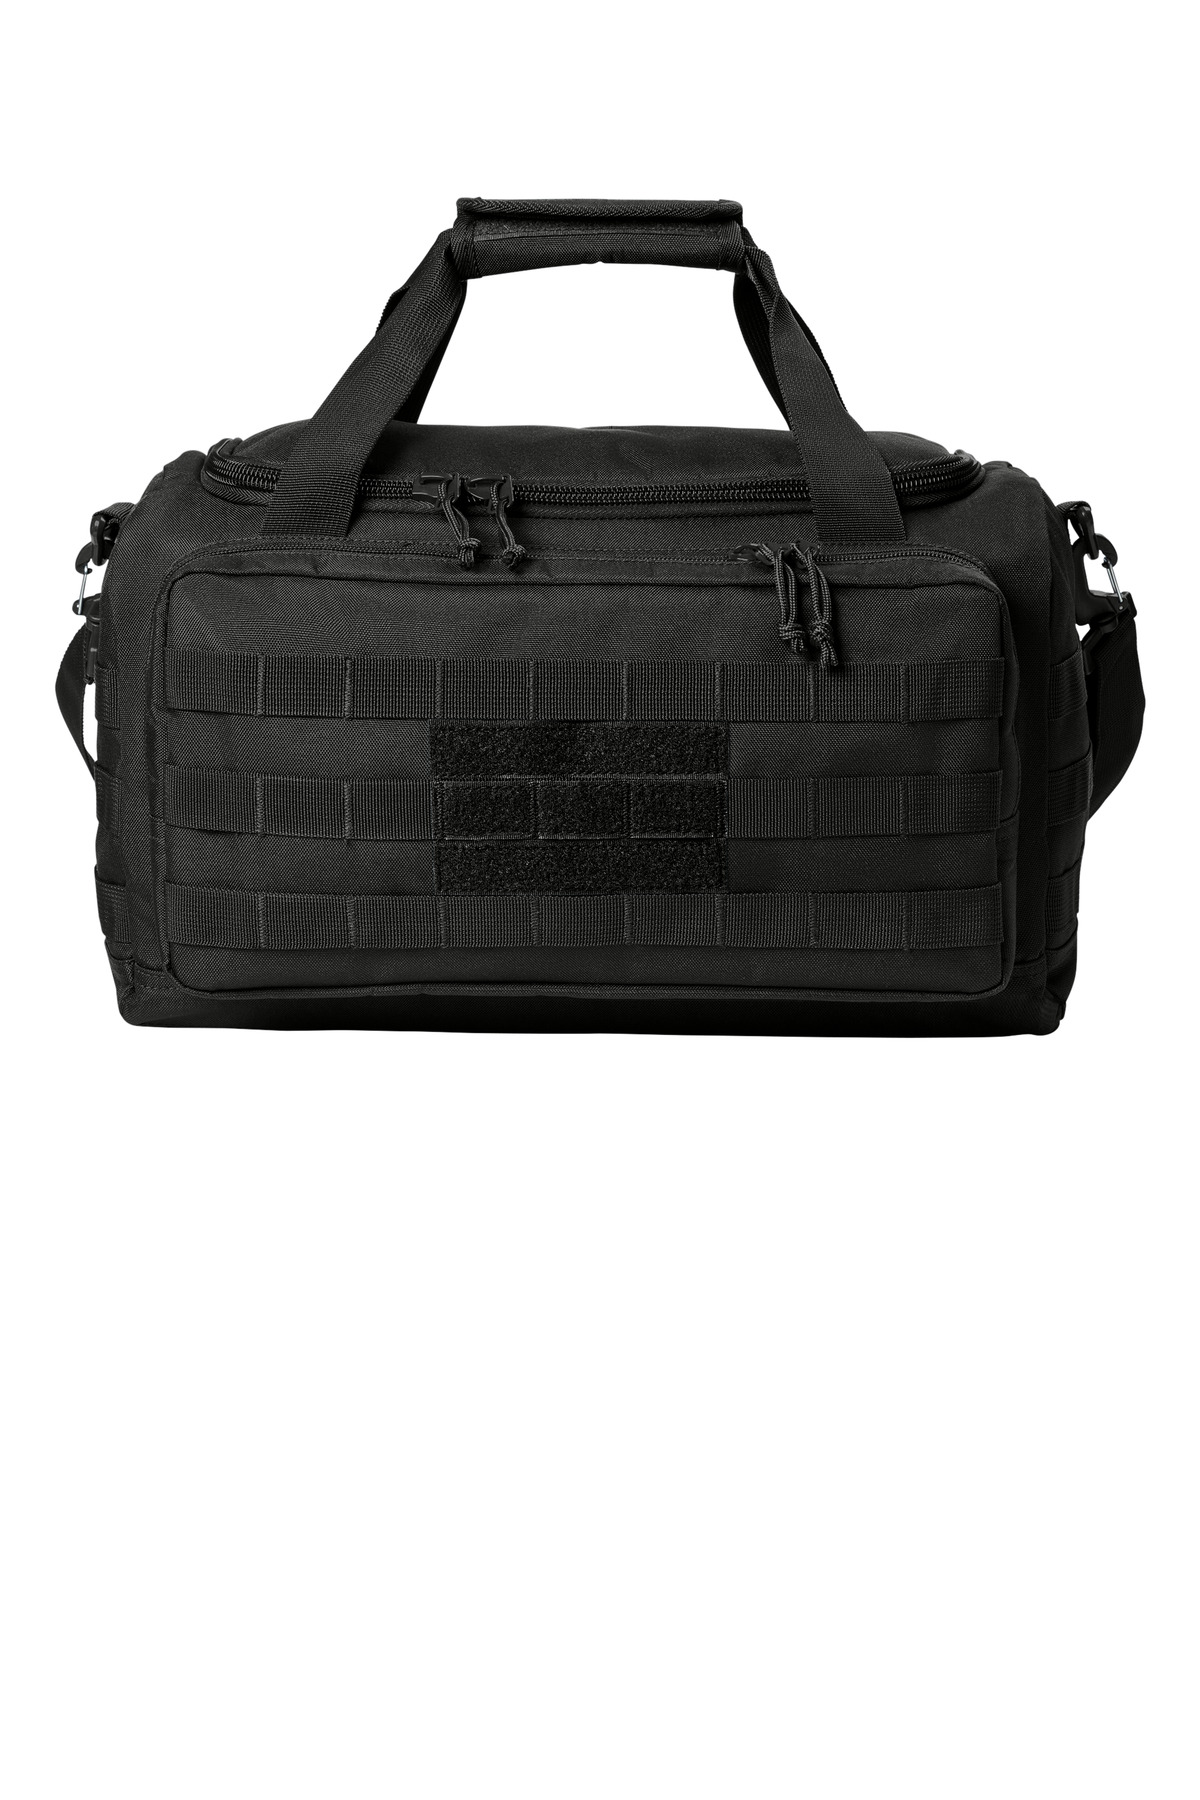 CornerStone Tactical Gear Bag CSB816